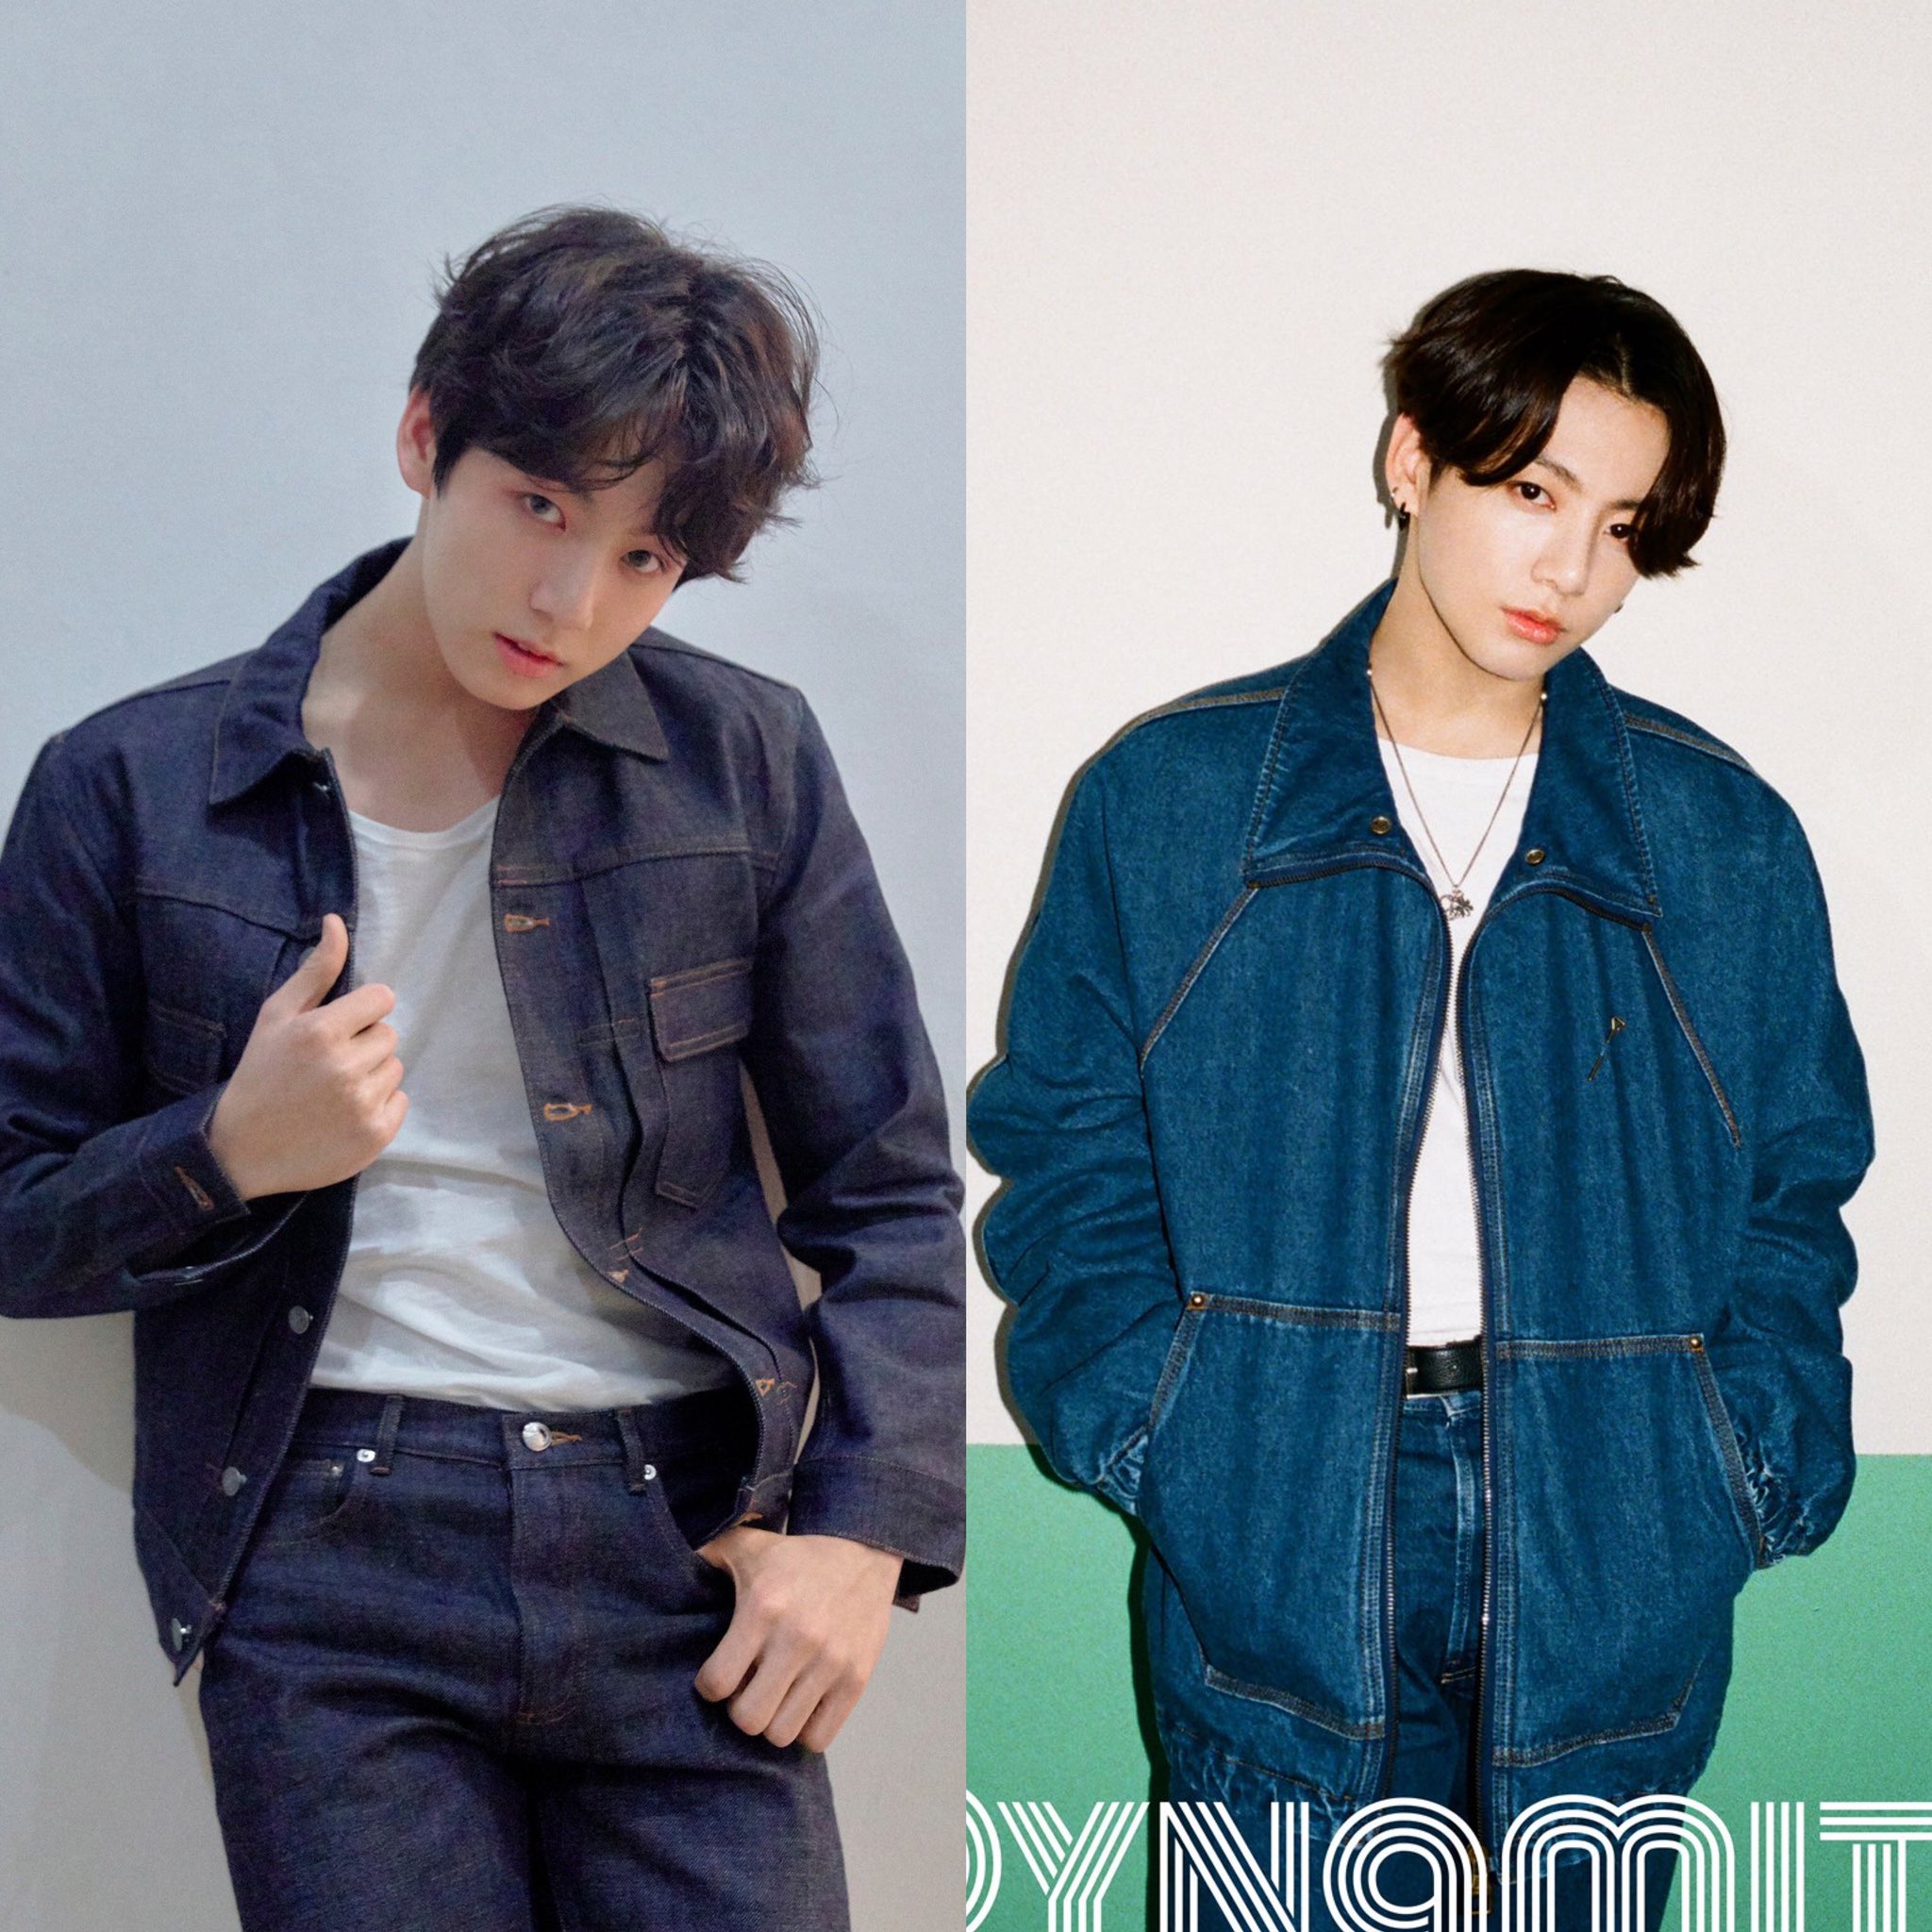 ً on X: Jimin and Jungkook wearing denim jackets reminds me of jikook love  yourself: tear era photo teasers! #1stDynamiteTeaser @BTS_twt   / X